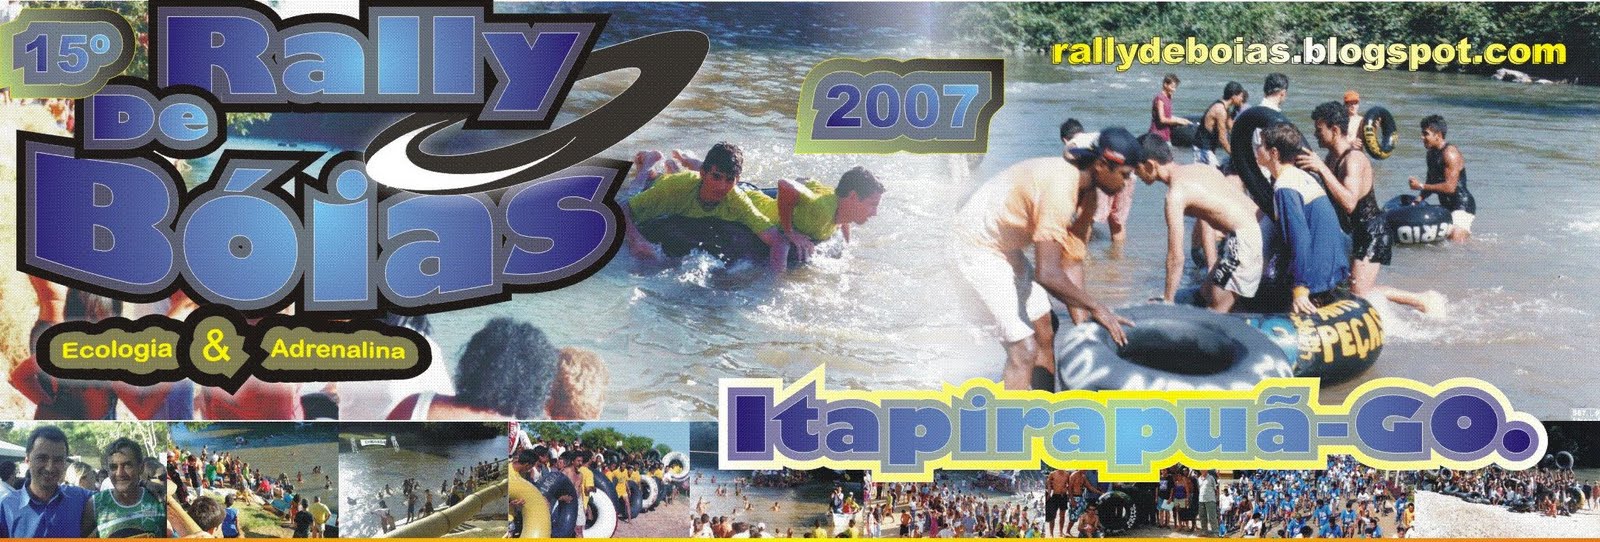 15º Rally de Bóias de Itapirapuã2007